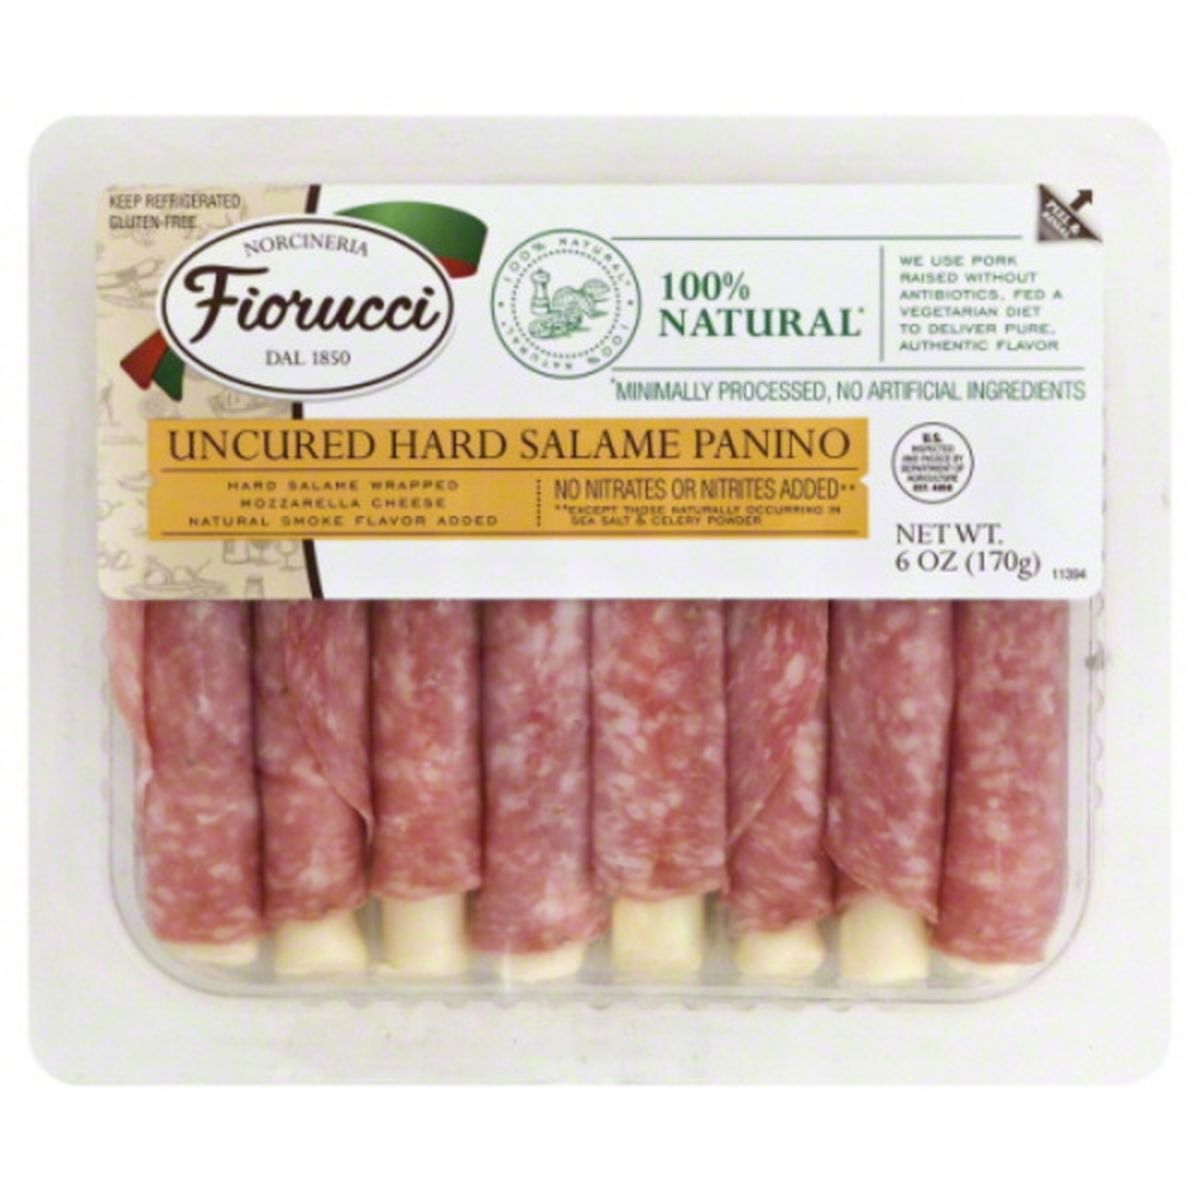 Calories in Fiorucci Panino, Uncured Hard Salame